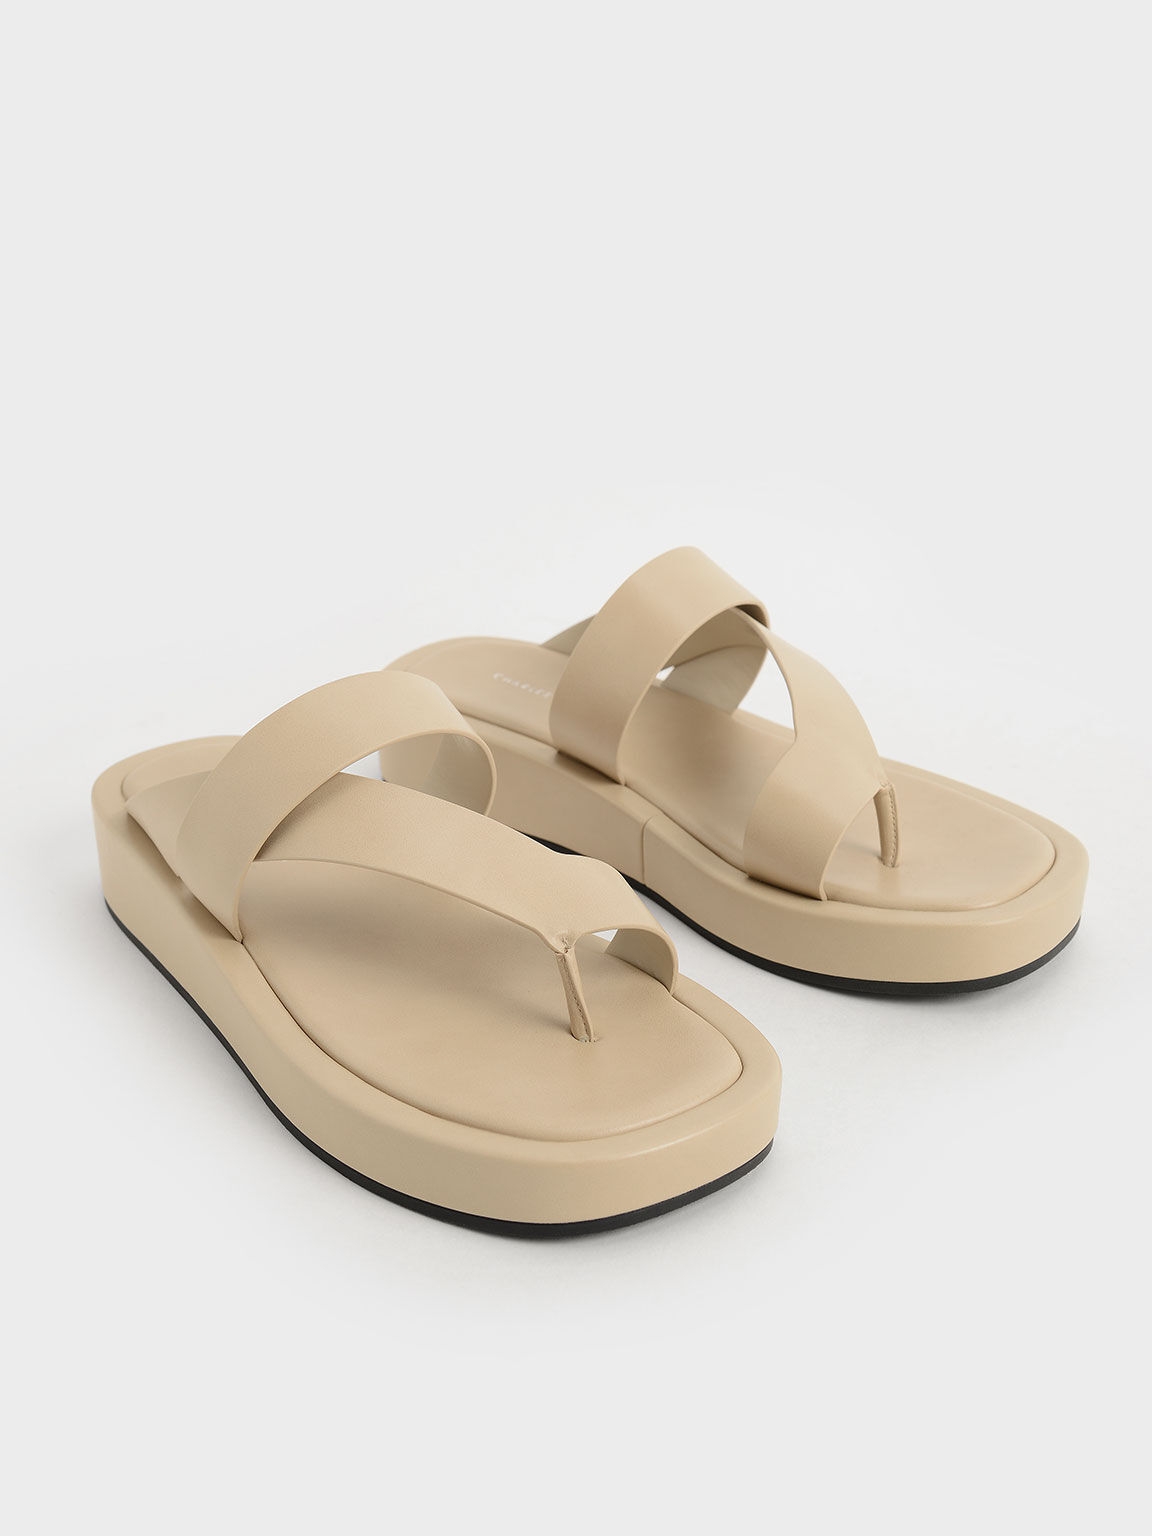 Toe-Loop Platform Sandals, Beige, hi-res